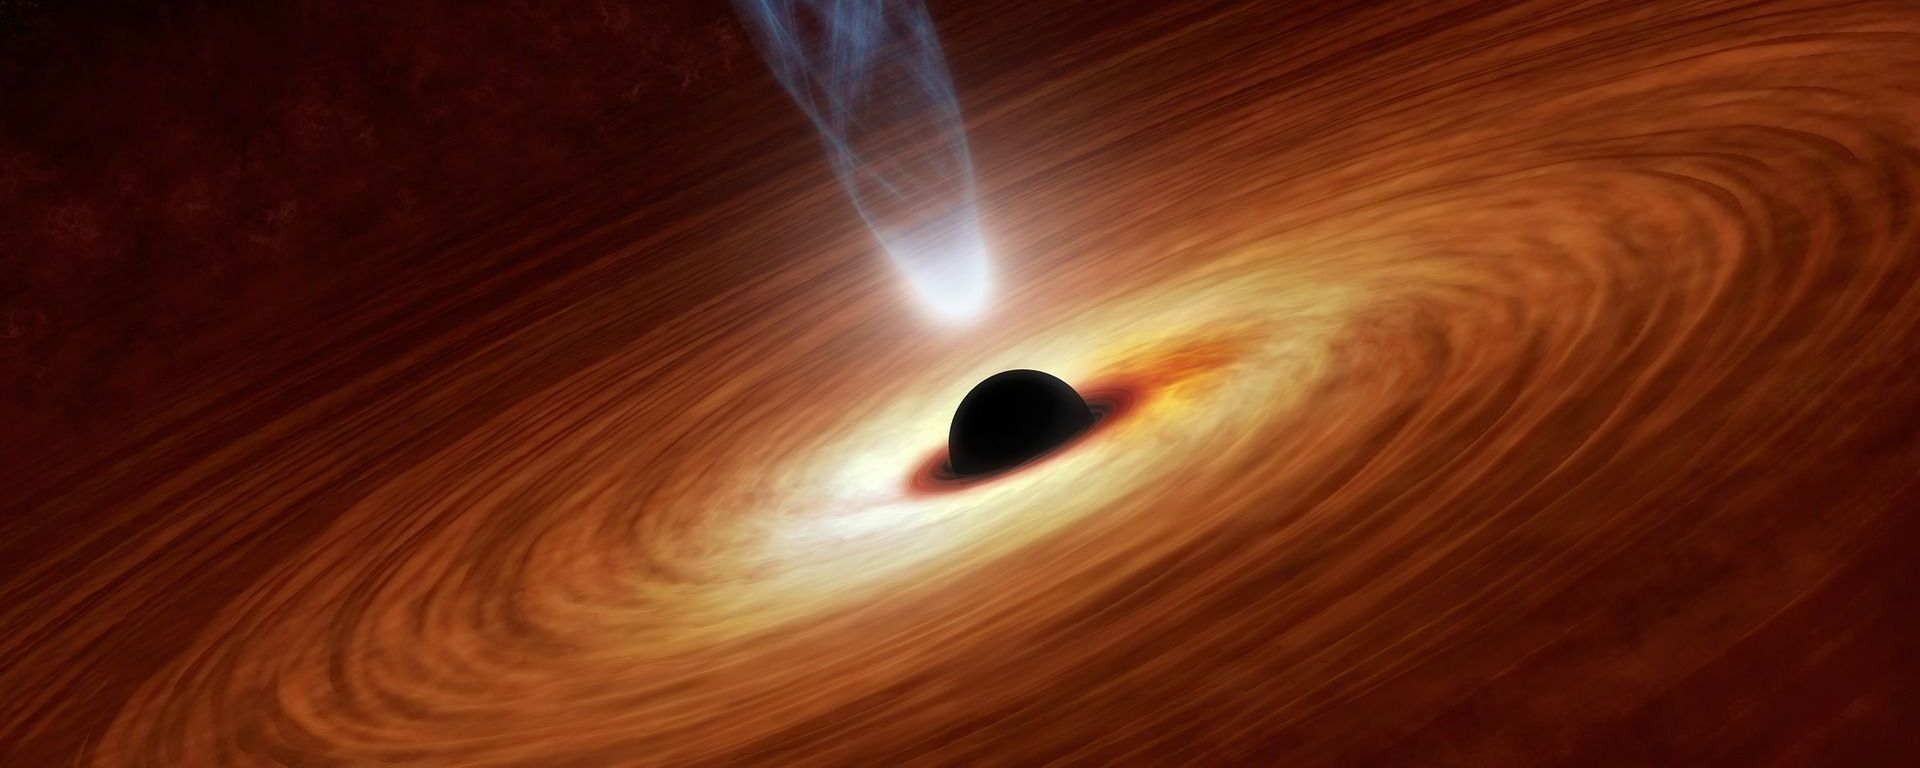 Un agujero negro (imagen referencial) - Sputnik Mundo, 1920, 25.04.2021